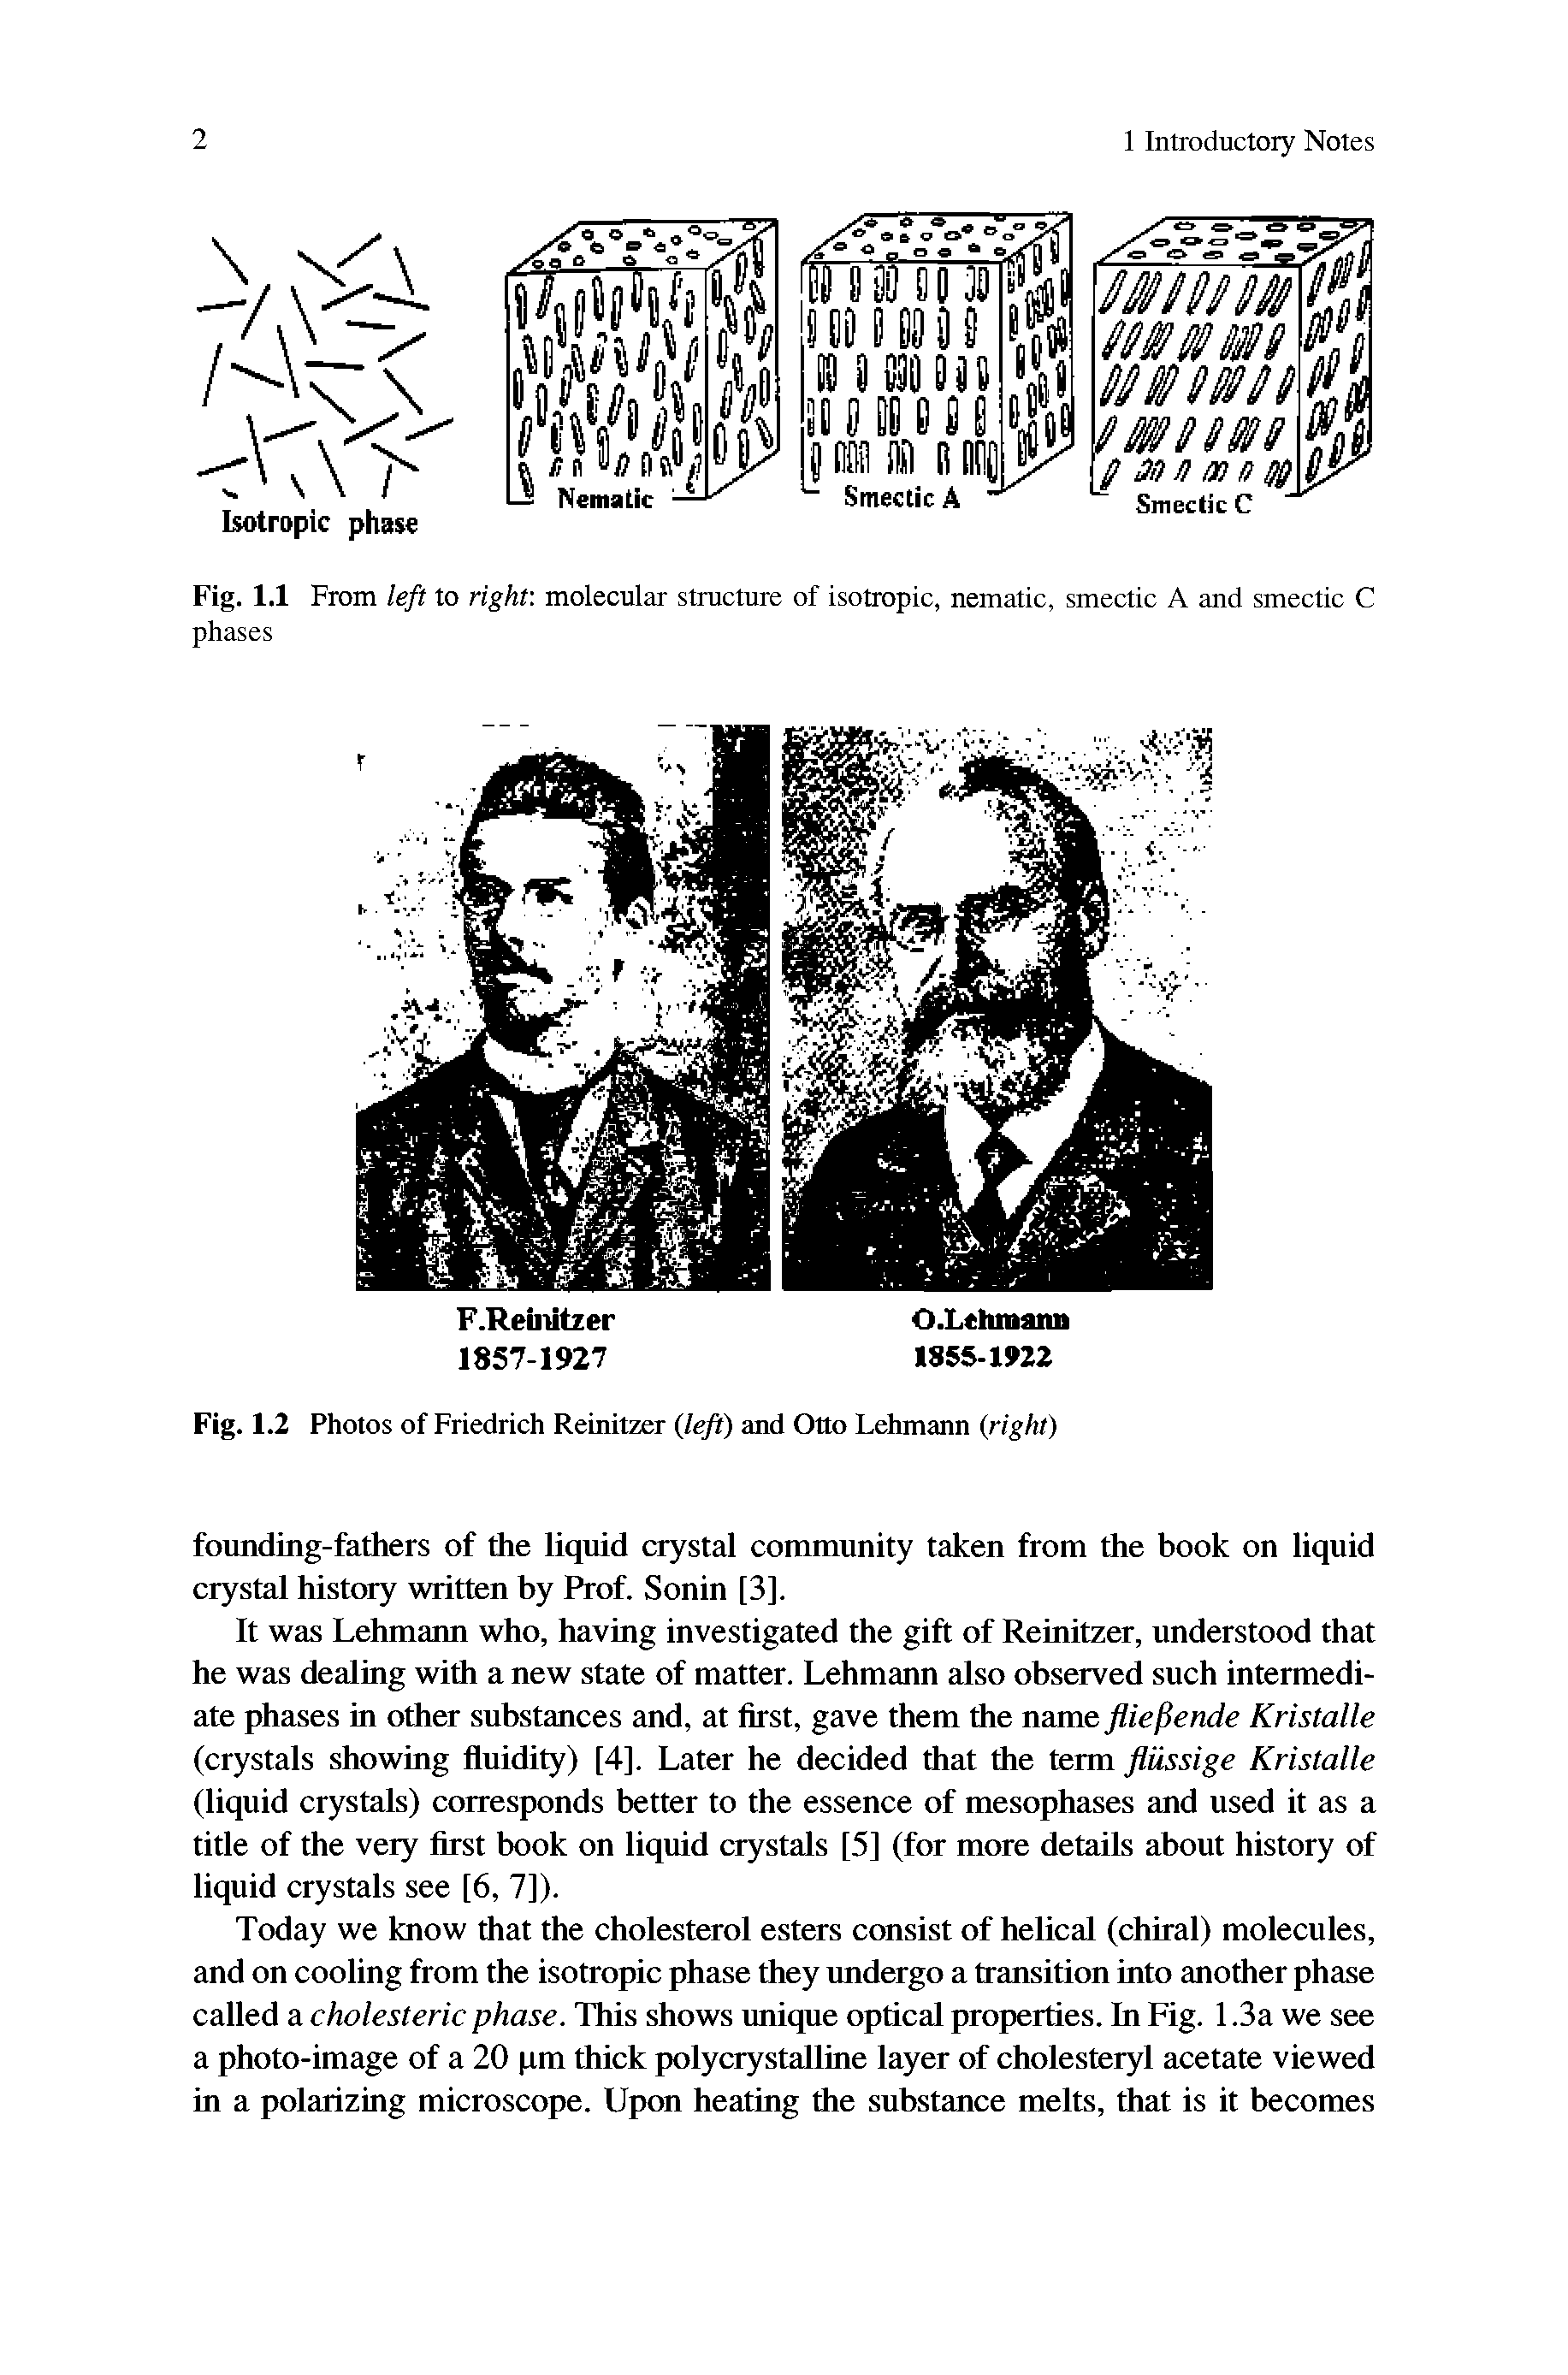 Fig. 1.2 Photos of Friedrich Reinitzer (/ ) and Otto Lehmann (right)...